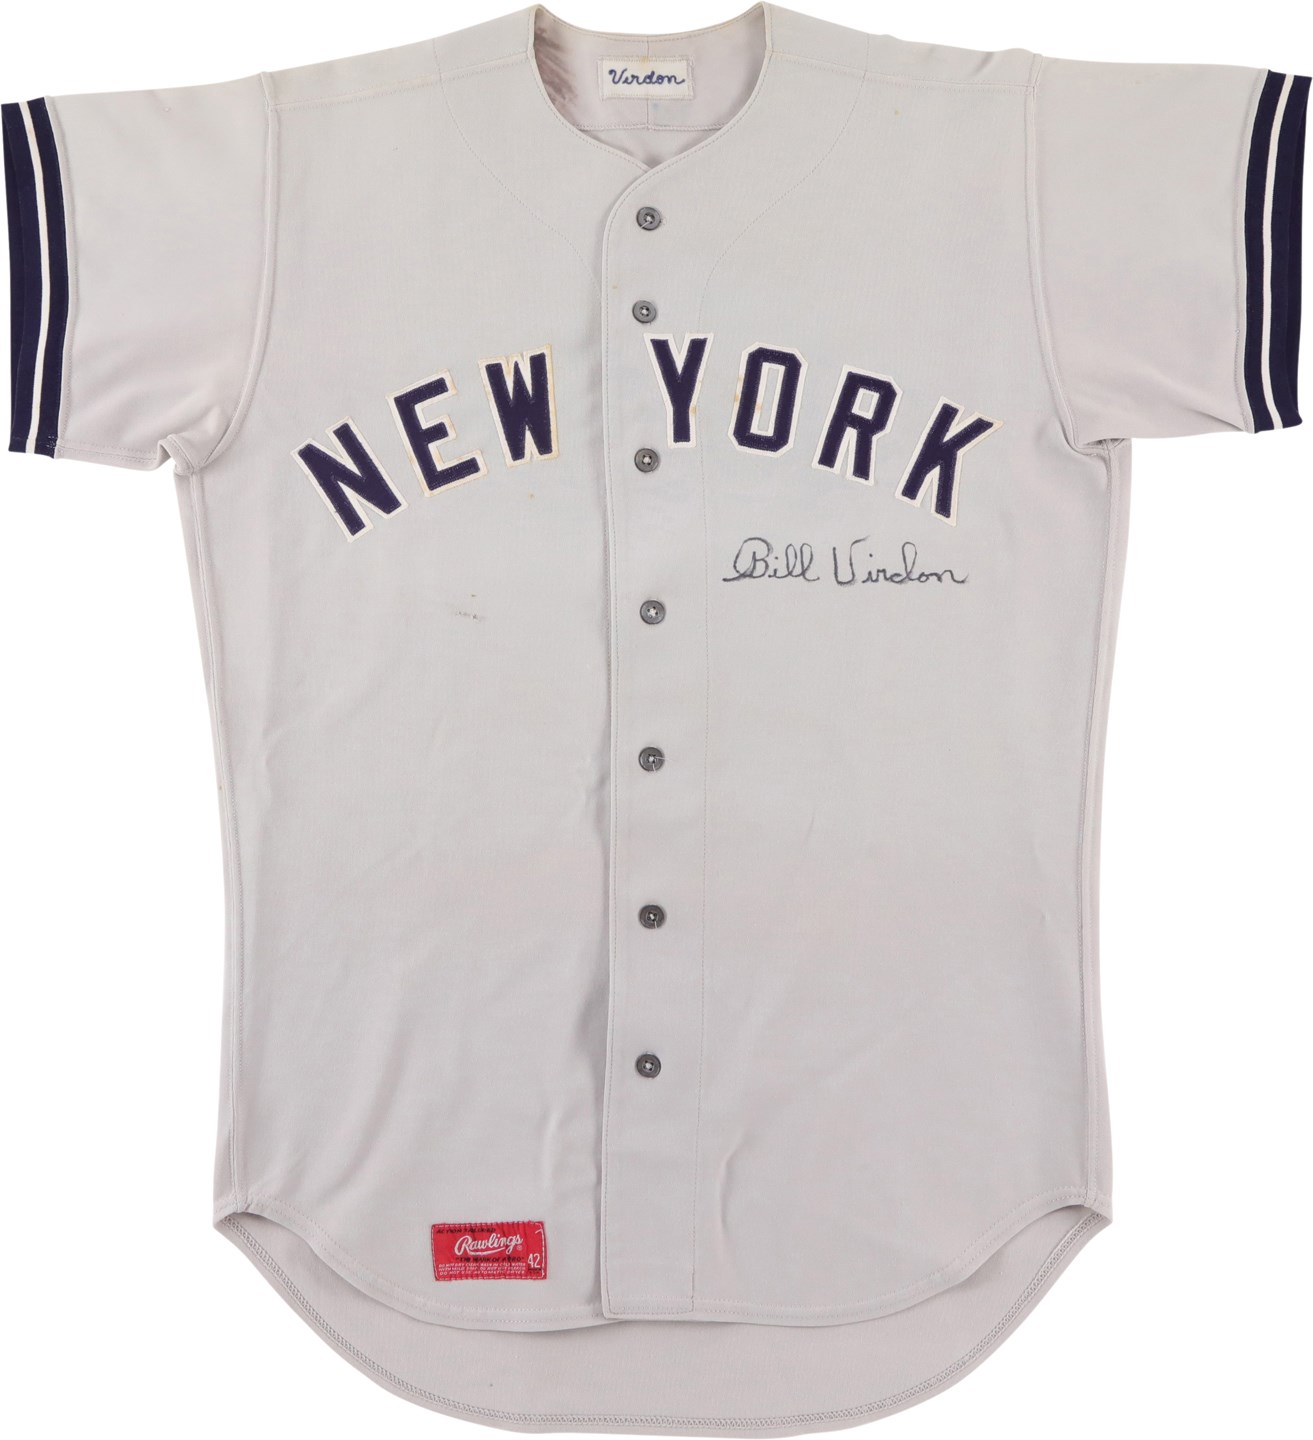 - 1975 Bill Virdon New York Yankees Signed Game Worn Jersey